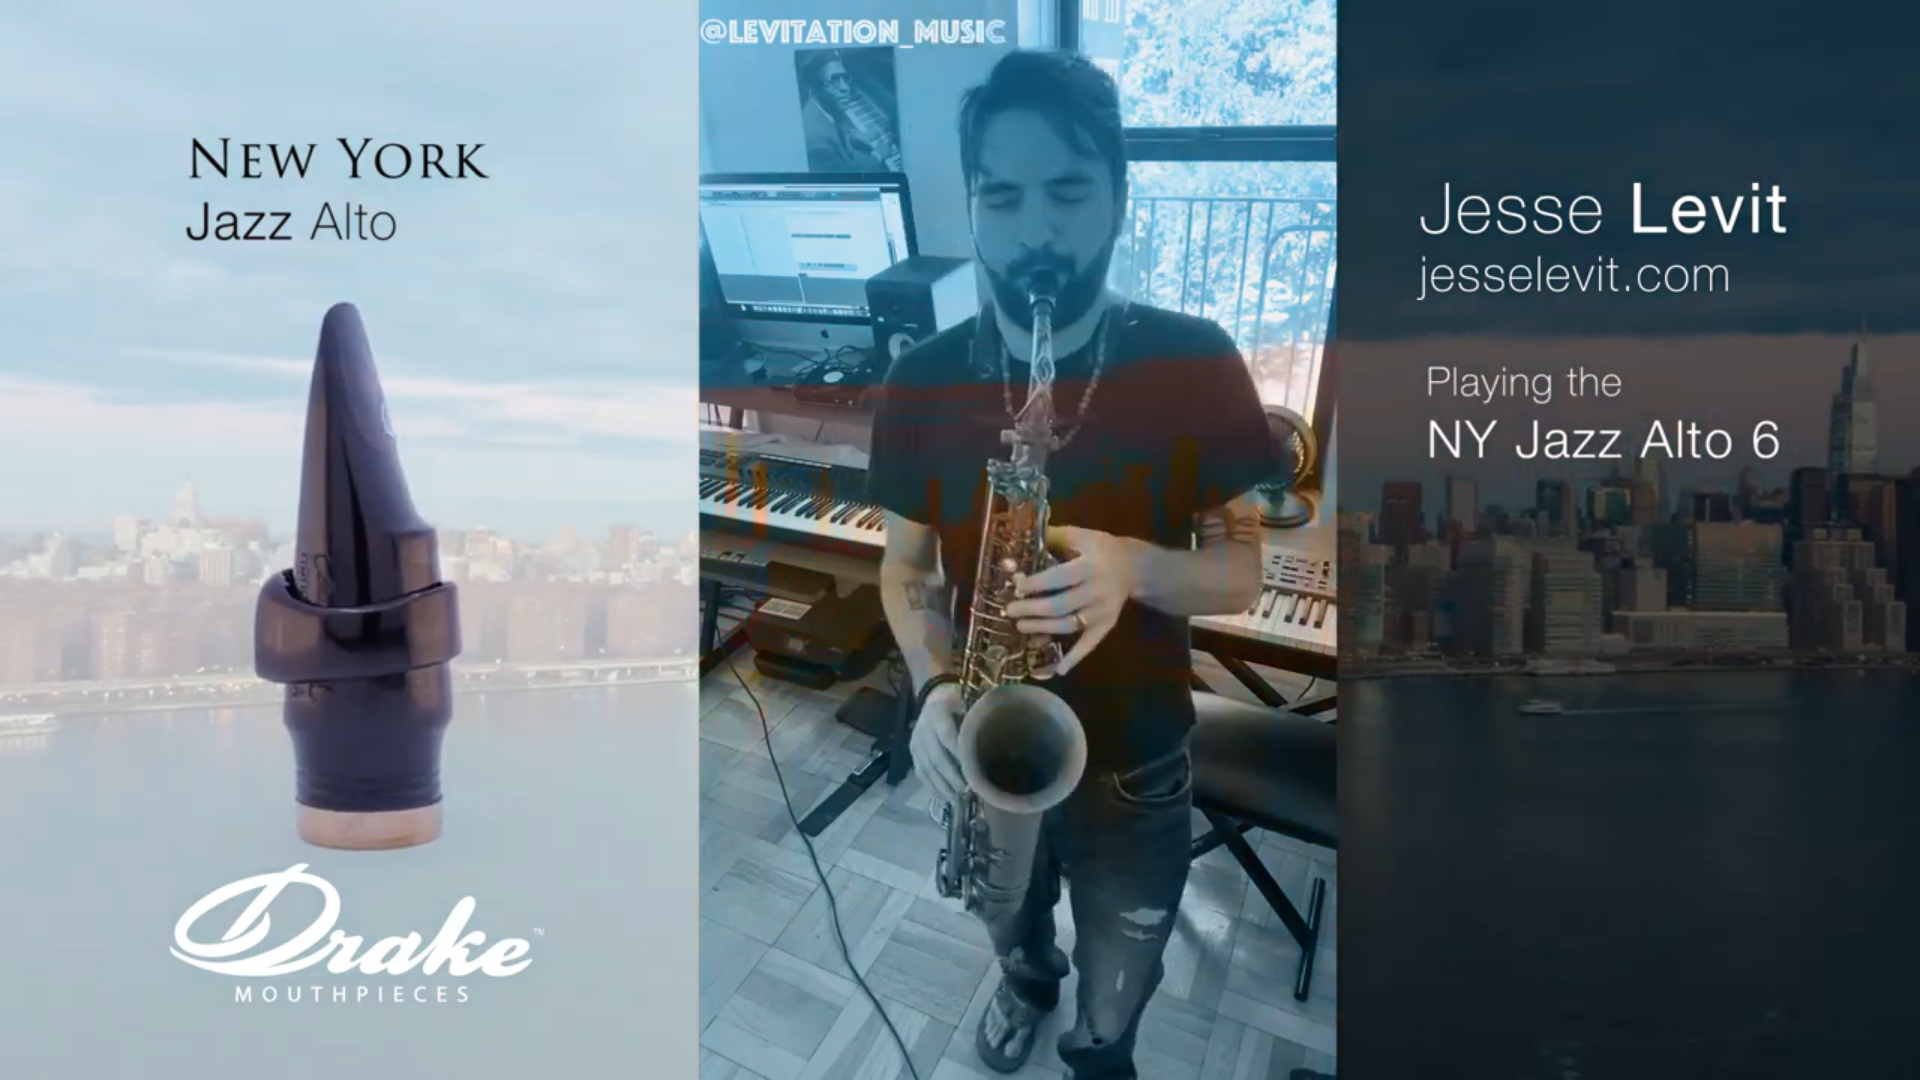 Drake Mouthpieces New York Jazz Alto Saxophone Mouthpiece Model Jesse Levit